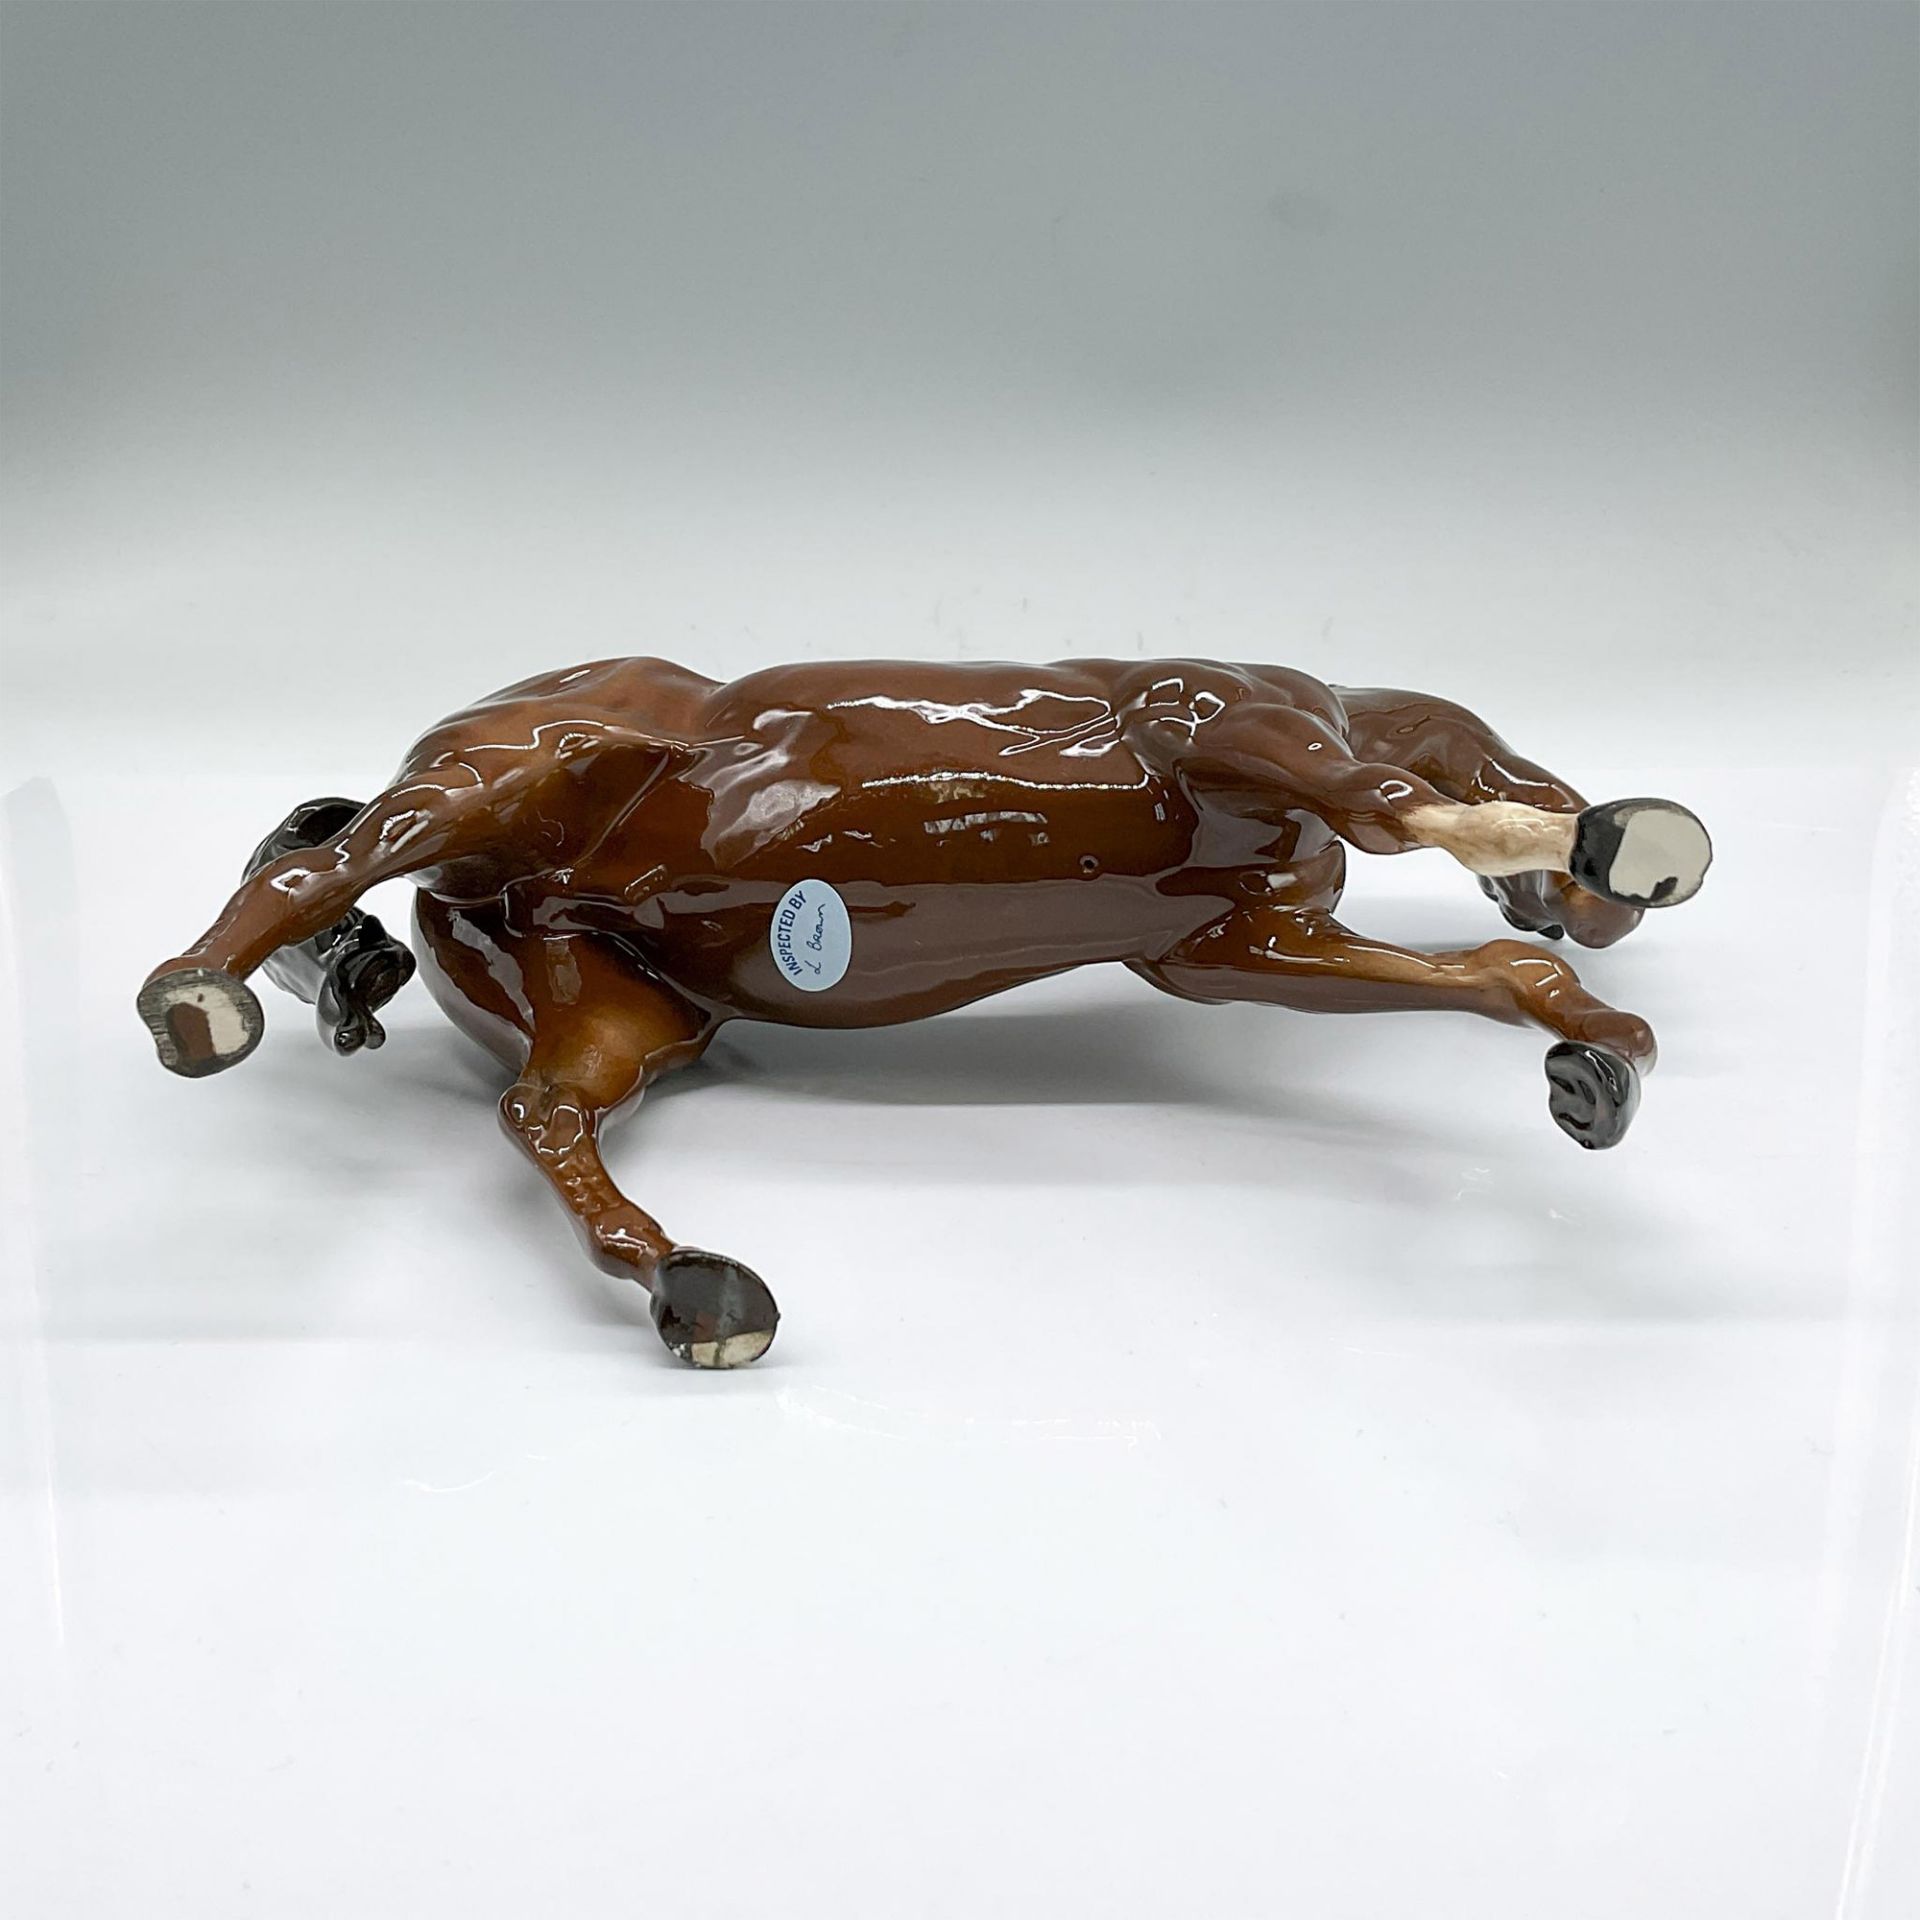 Horse Spirit of Youth - DA59A - Royal Doulton Animal Figurine - Image 3 of 4